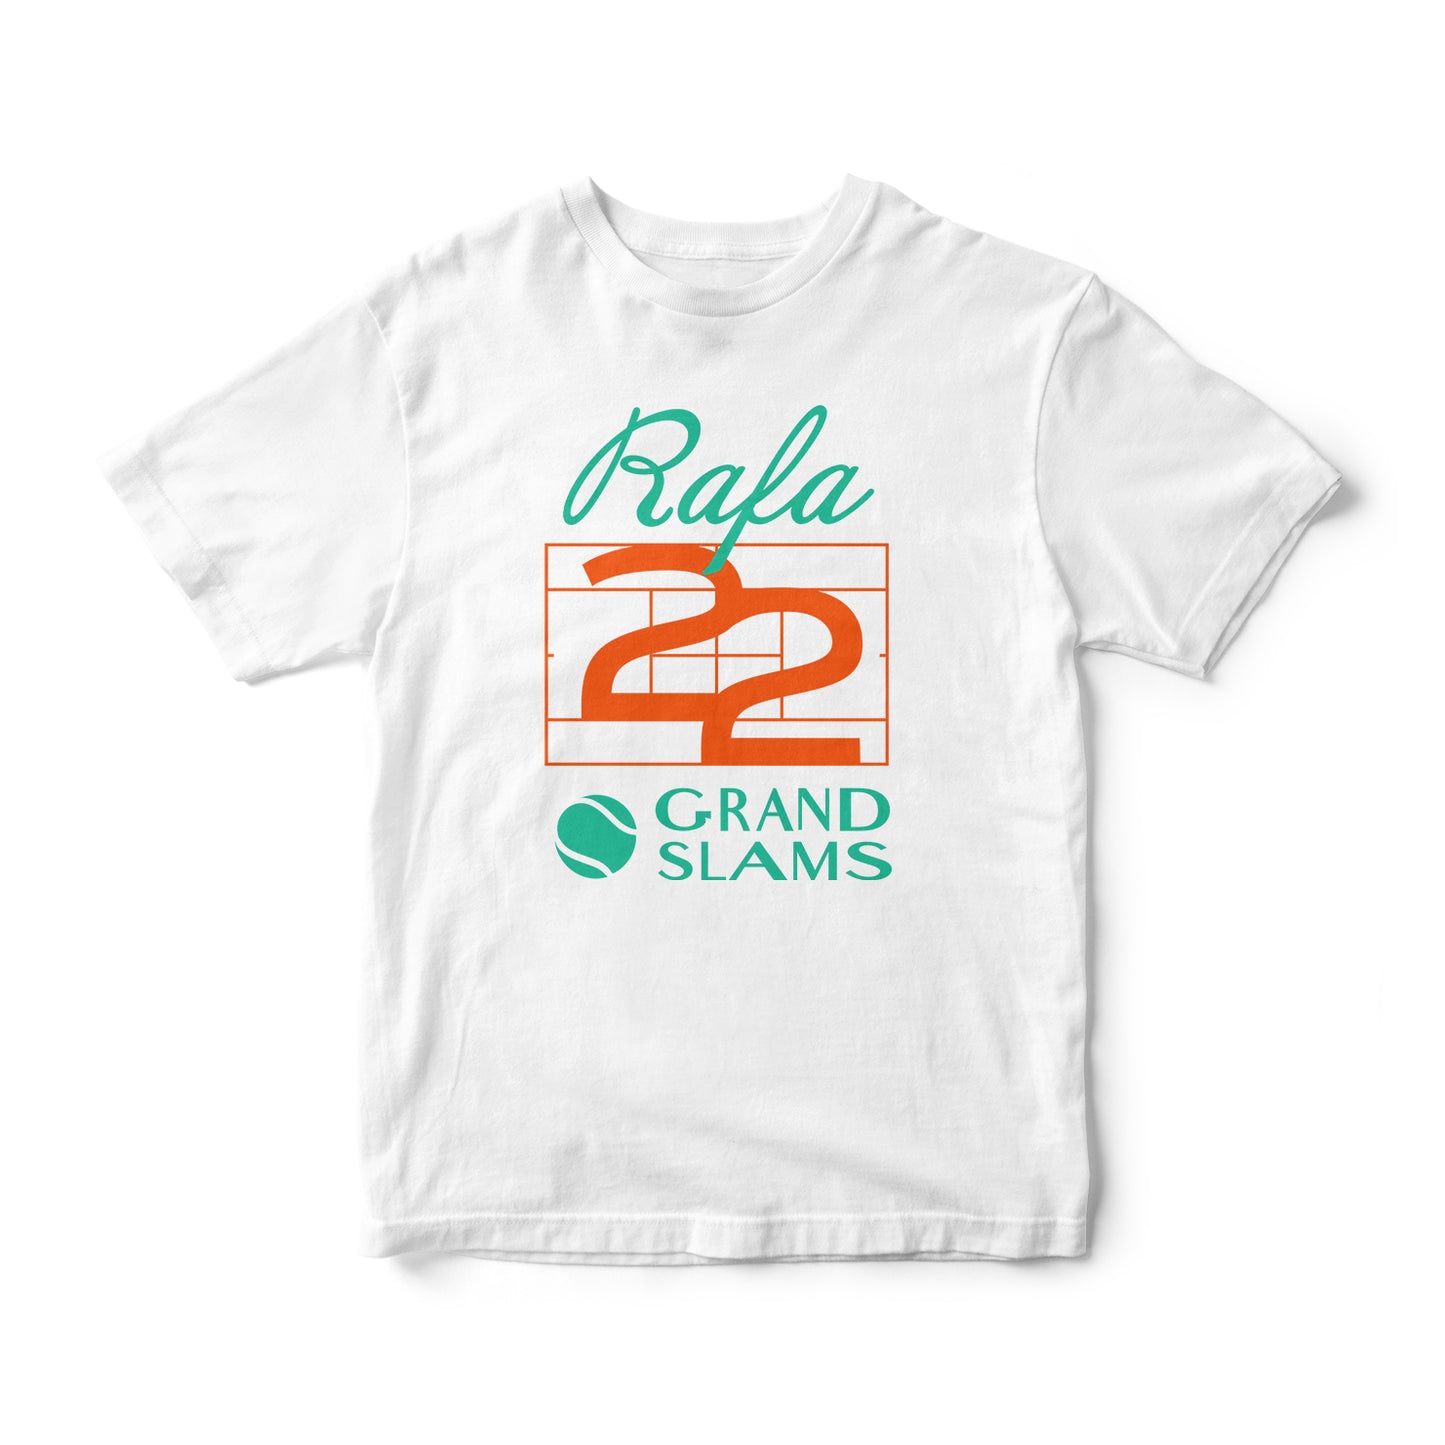 Rafa 22 Slams T-Shirt